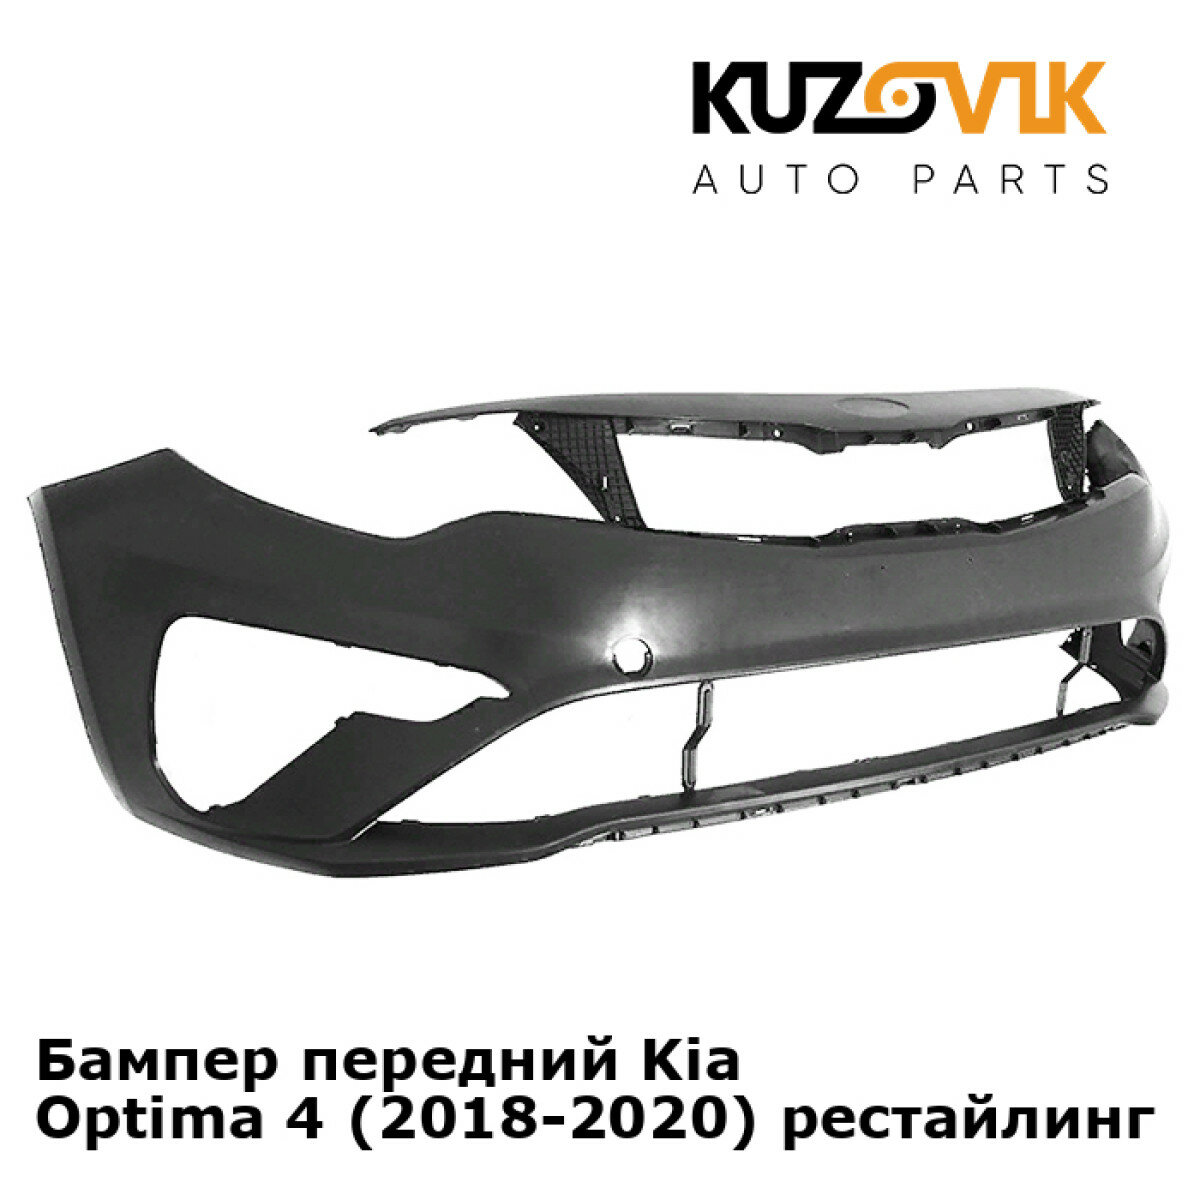 Бампер передний Kia Optima 4 (2018-2020) рестайлинг